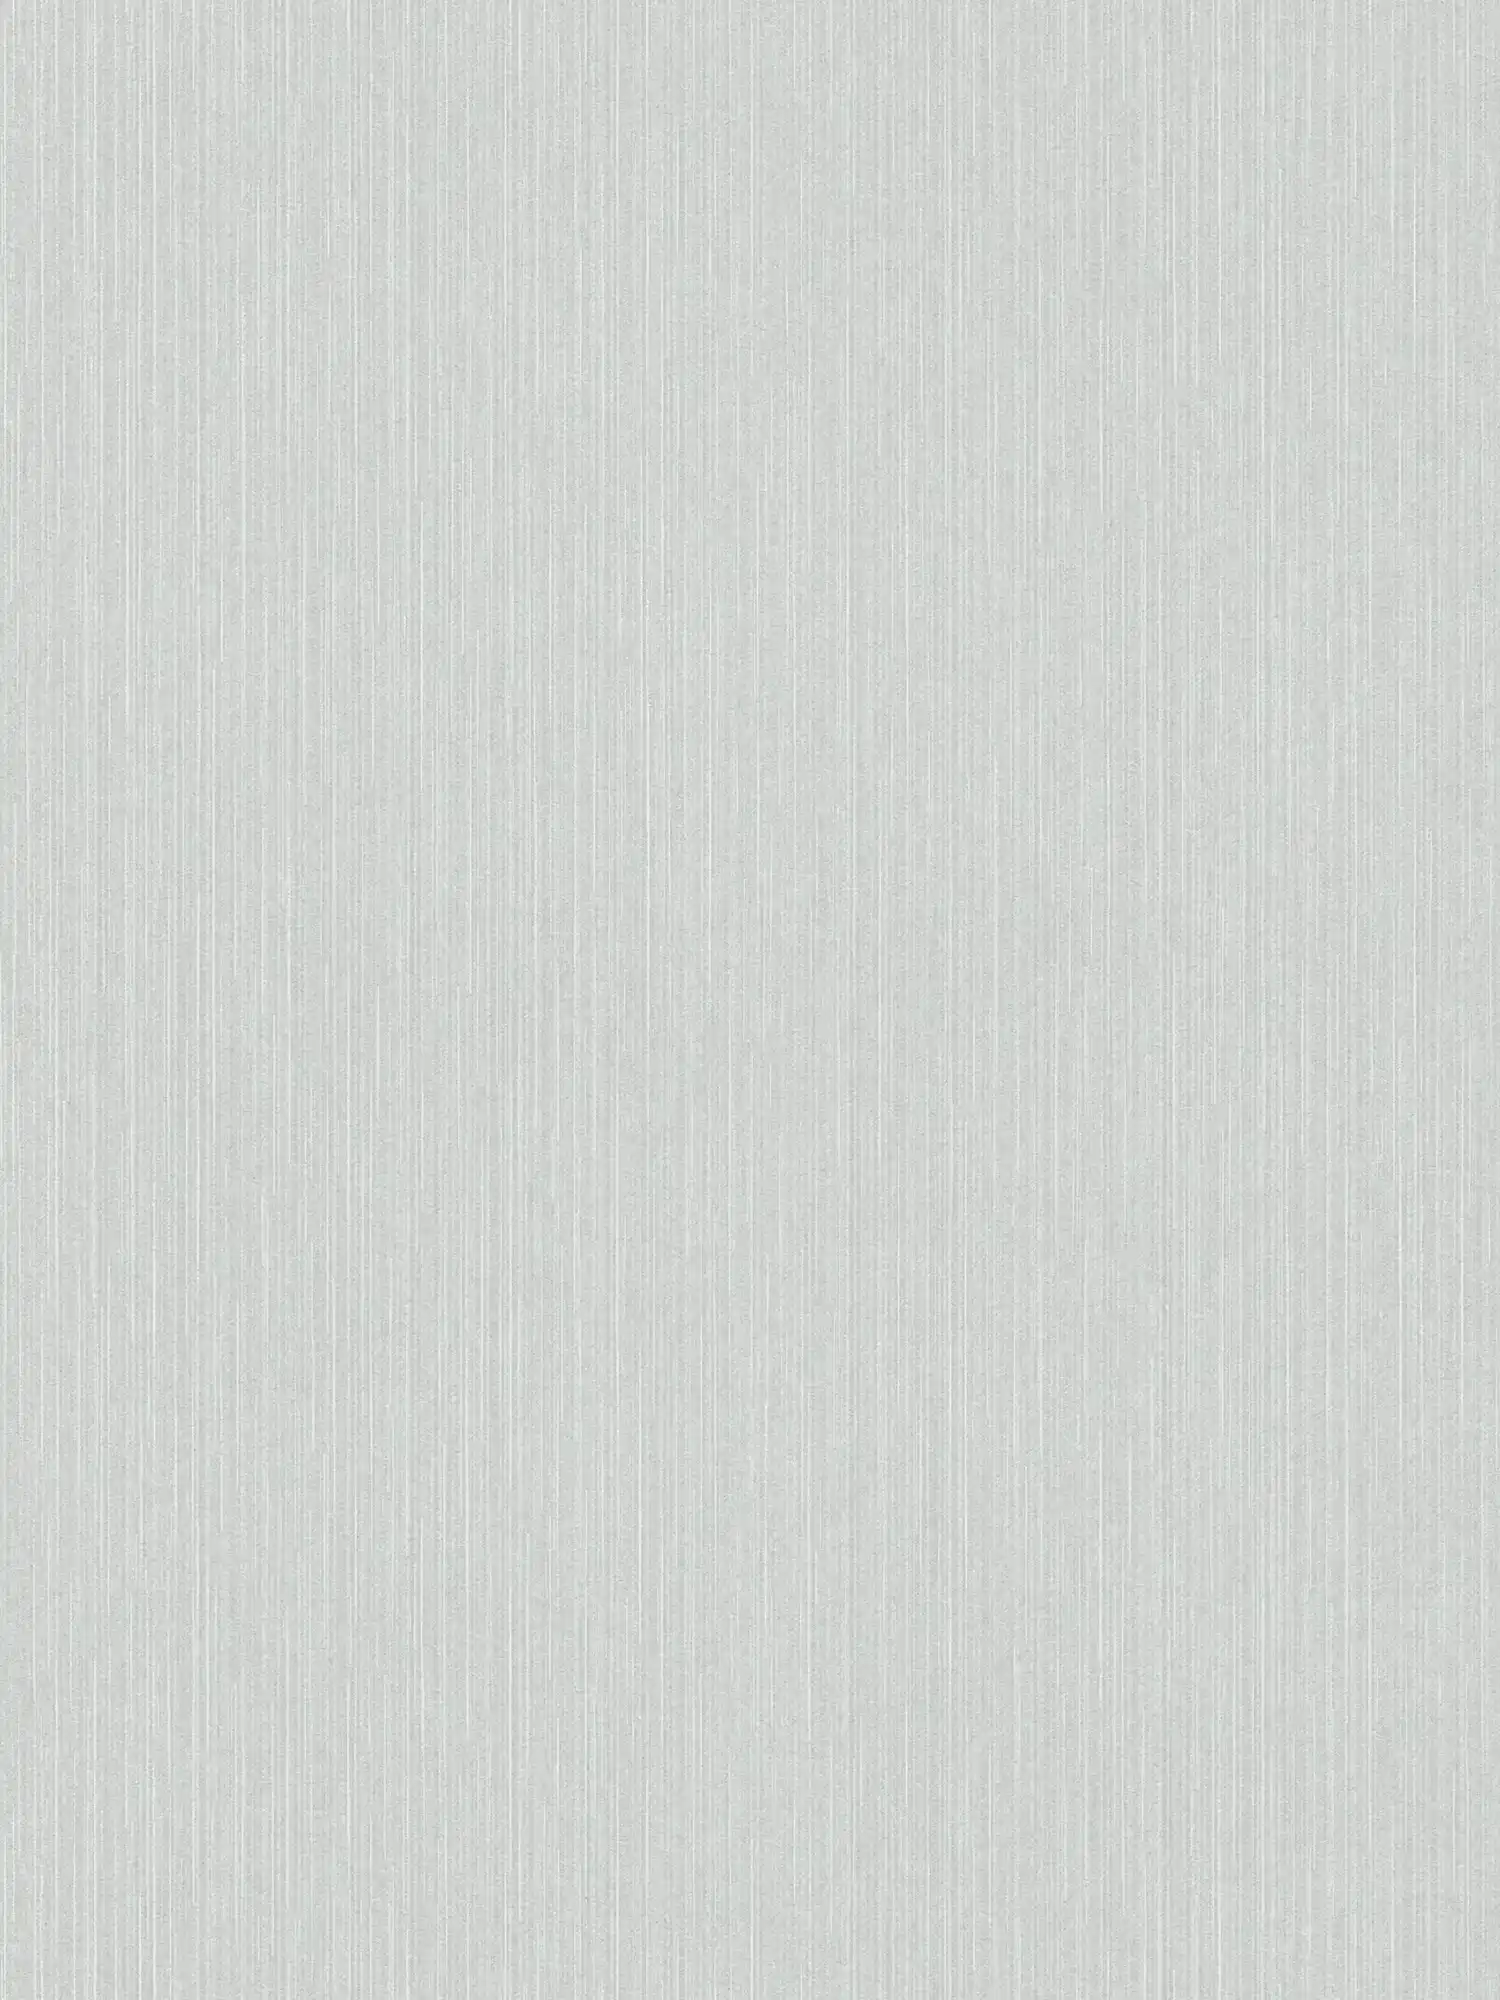 Linierte Tapete Silbergrau mit Glanzeffekt – Grau
